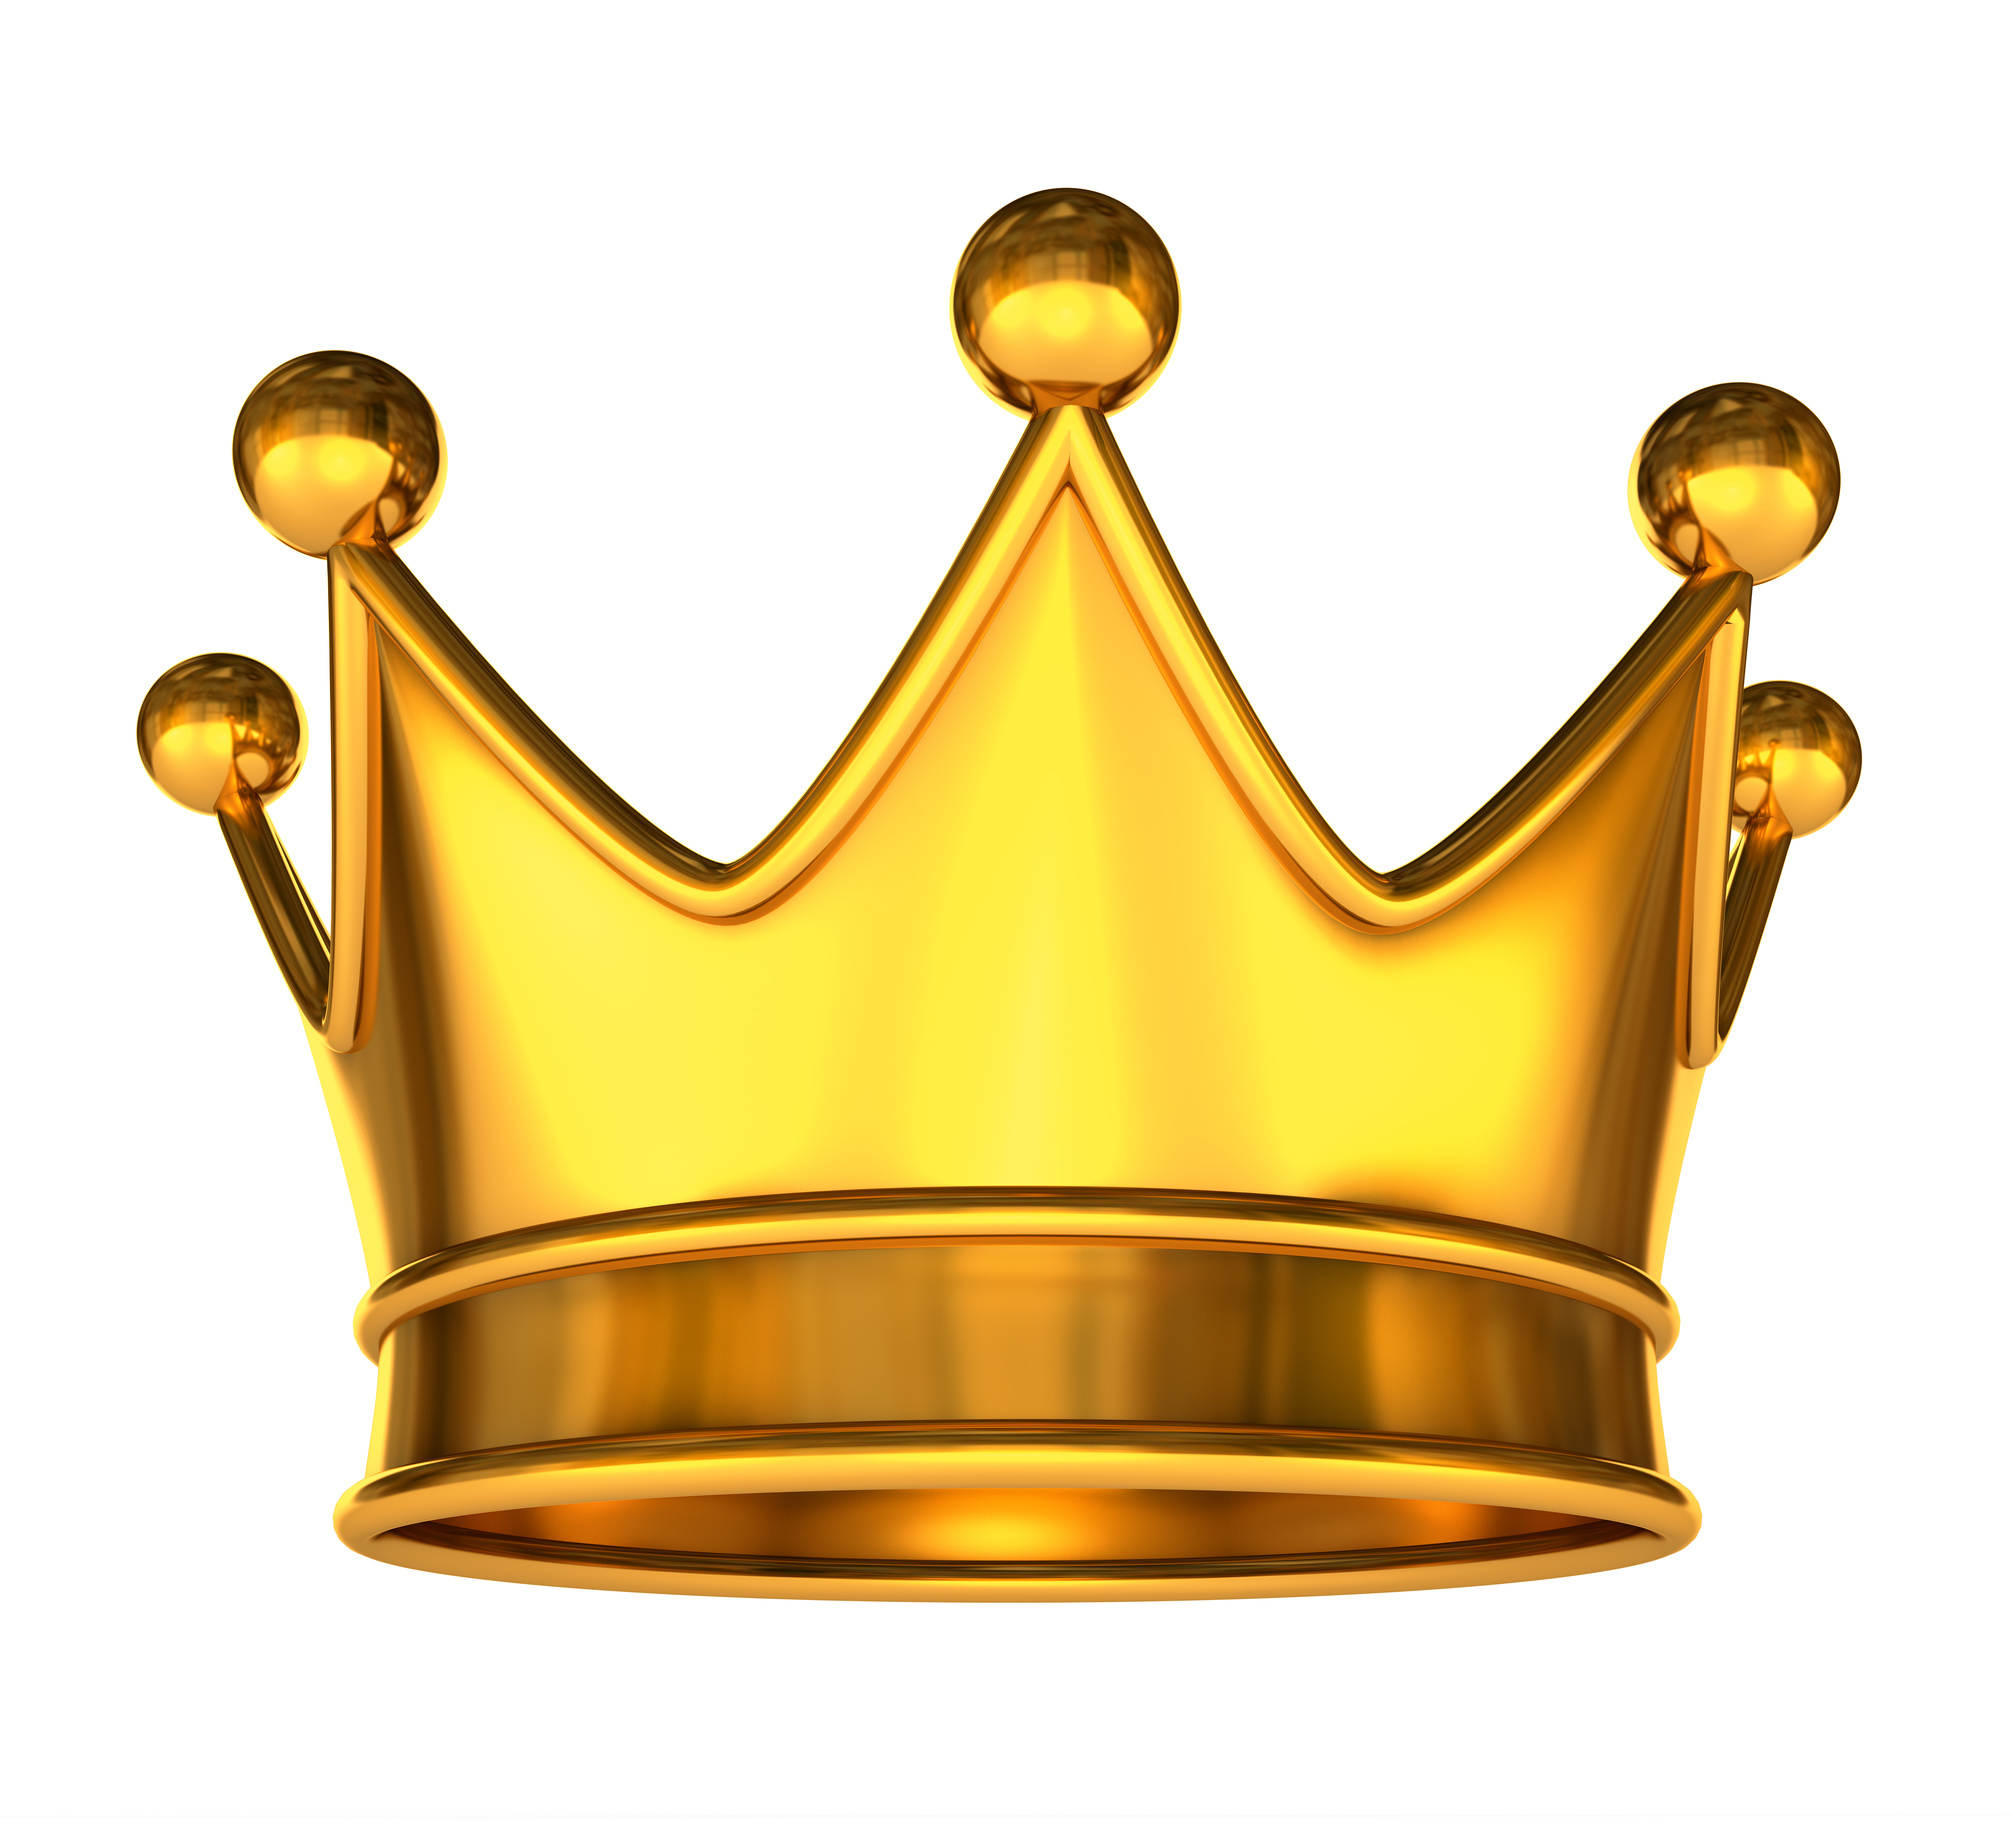 Free Printable Crowns For Kings